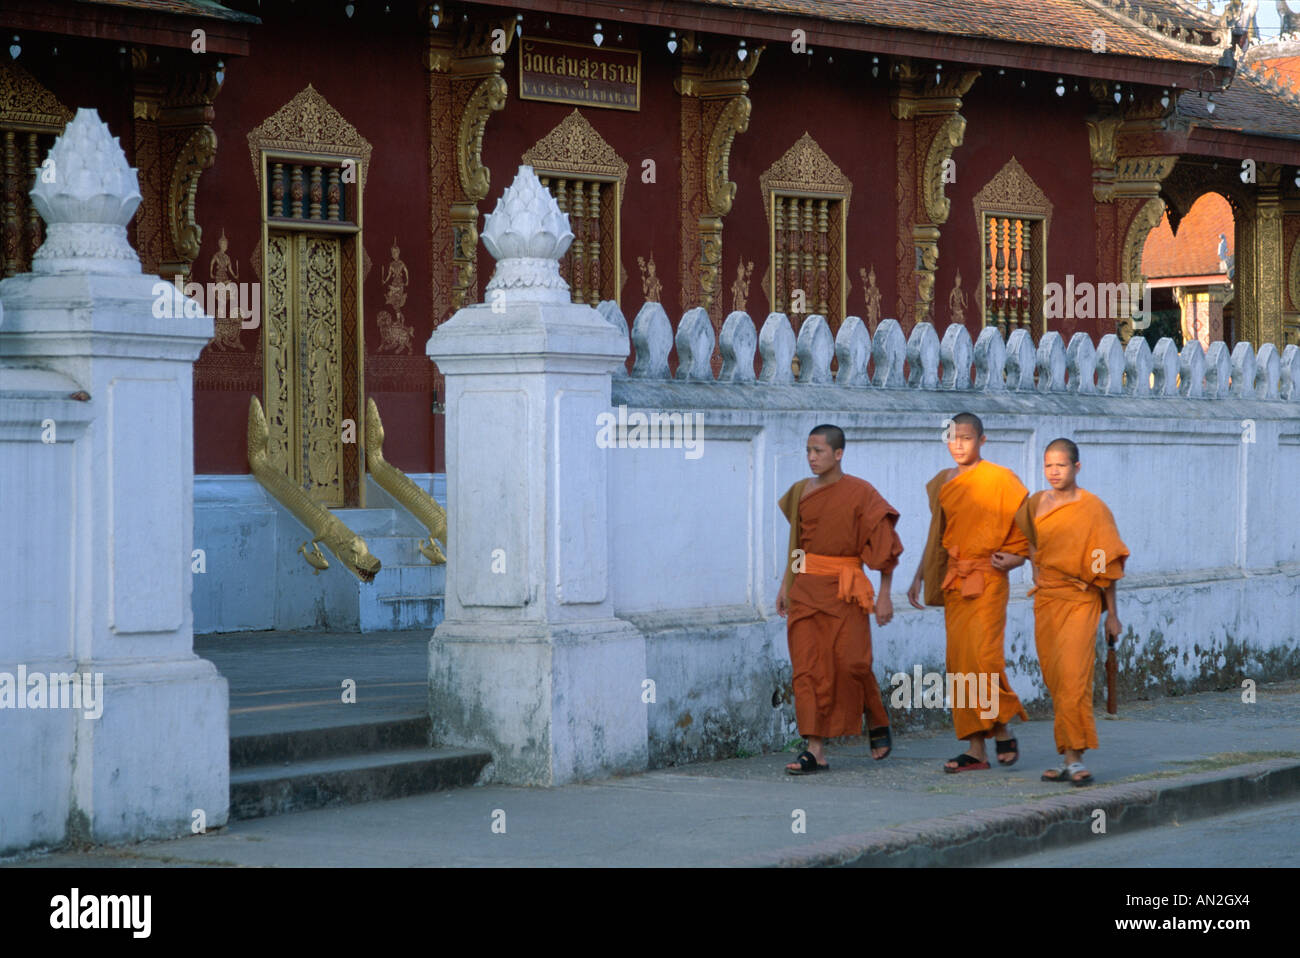 Wat Saen / Novice Monks, Luang Prabang, Laos Stock Photo